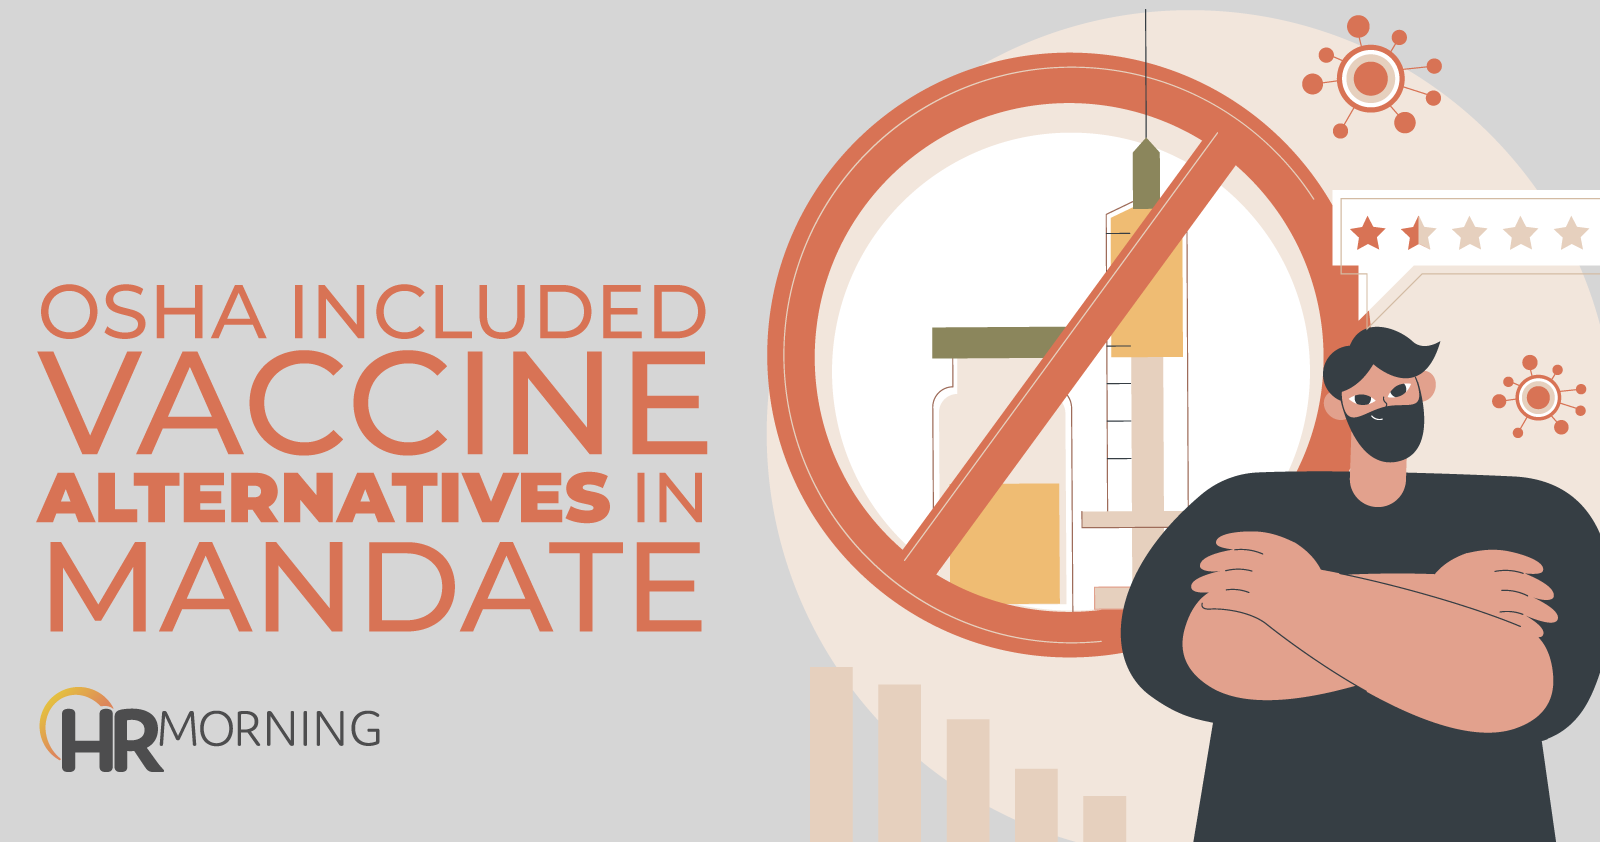 osha included vaccine alternatives in mandate